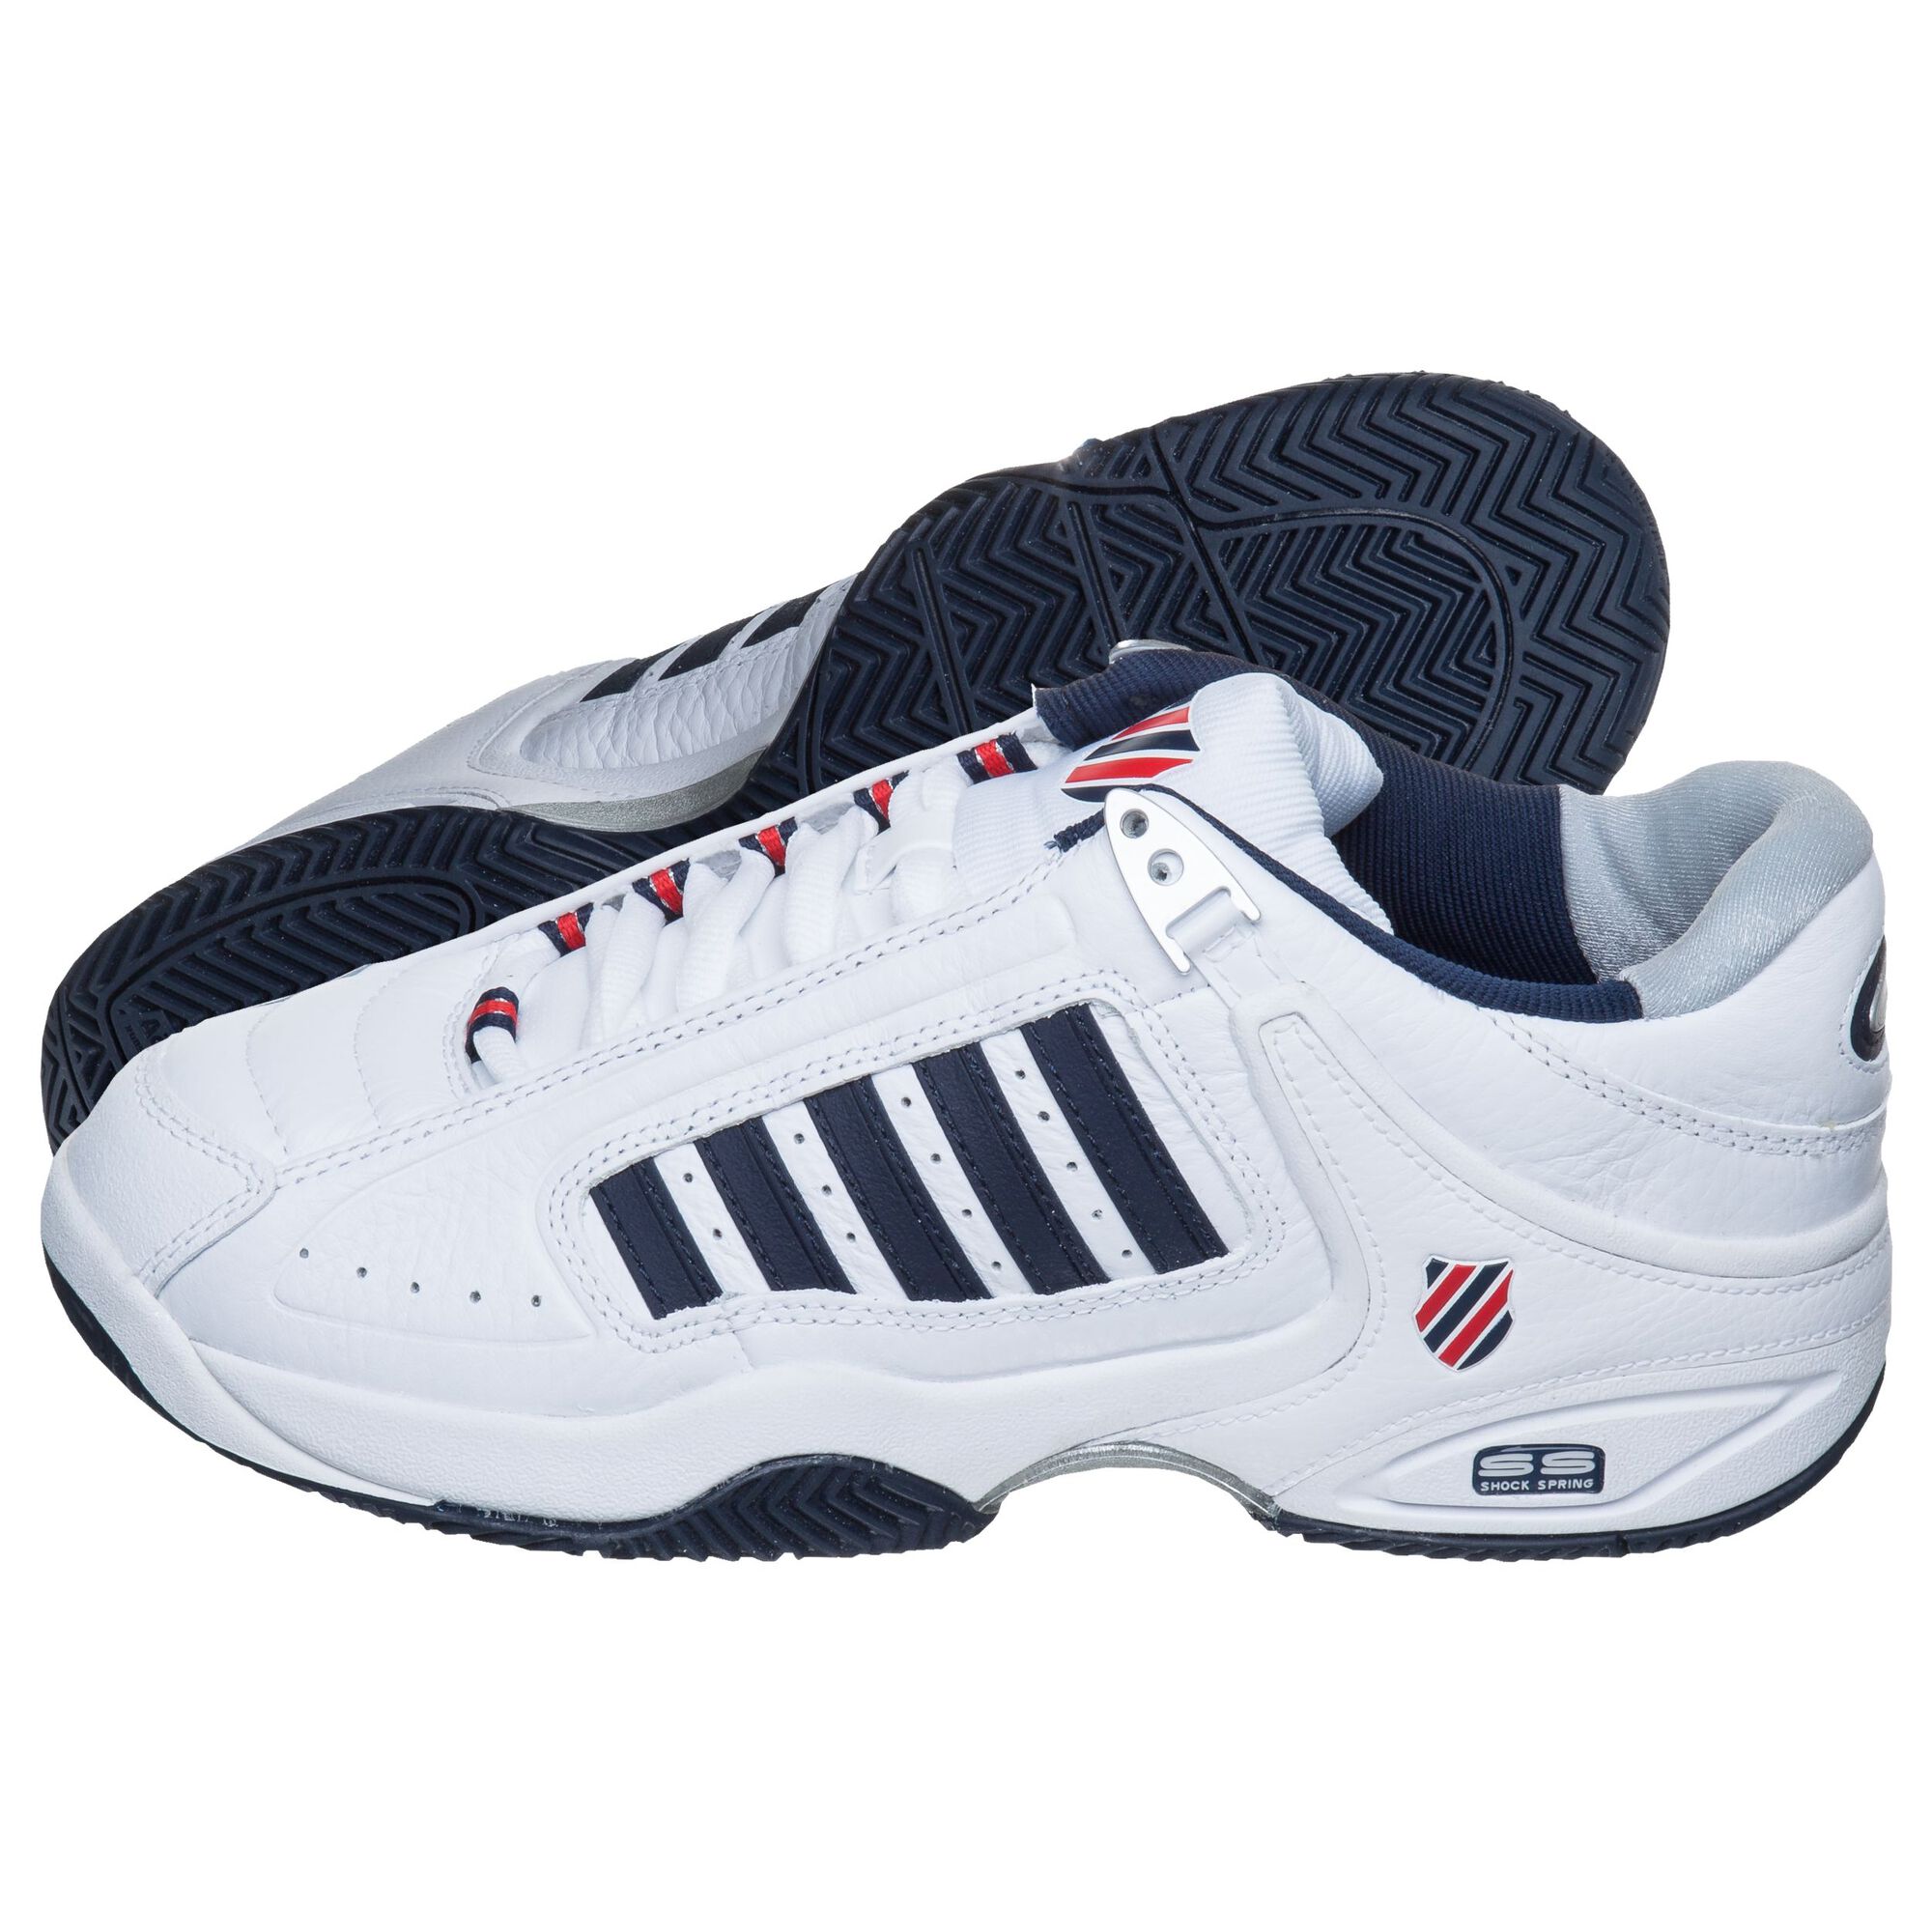 Verlammen vrouwelijk Aanbevolen buy K-Swiss Defier RS All Court Shoe Men - White, Blue online | Tennis-Point